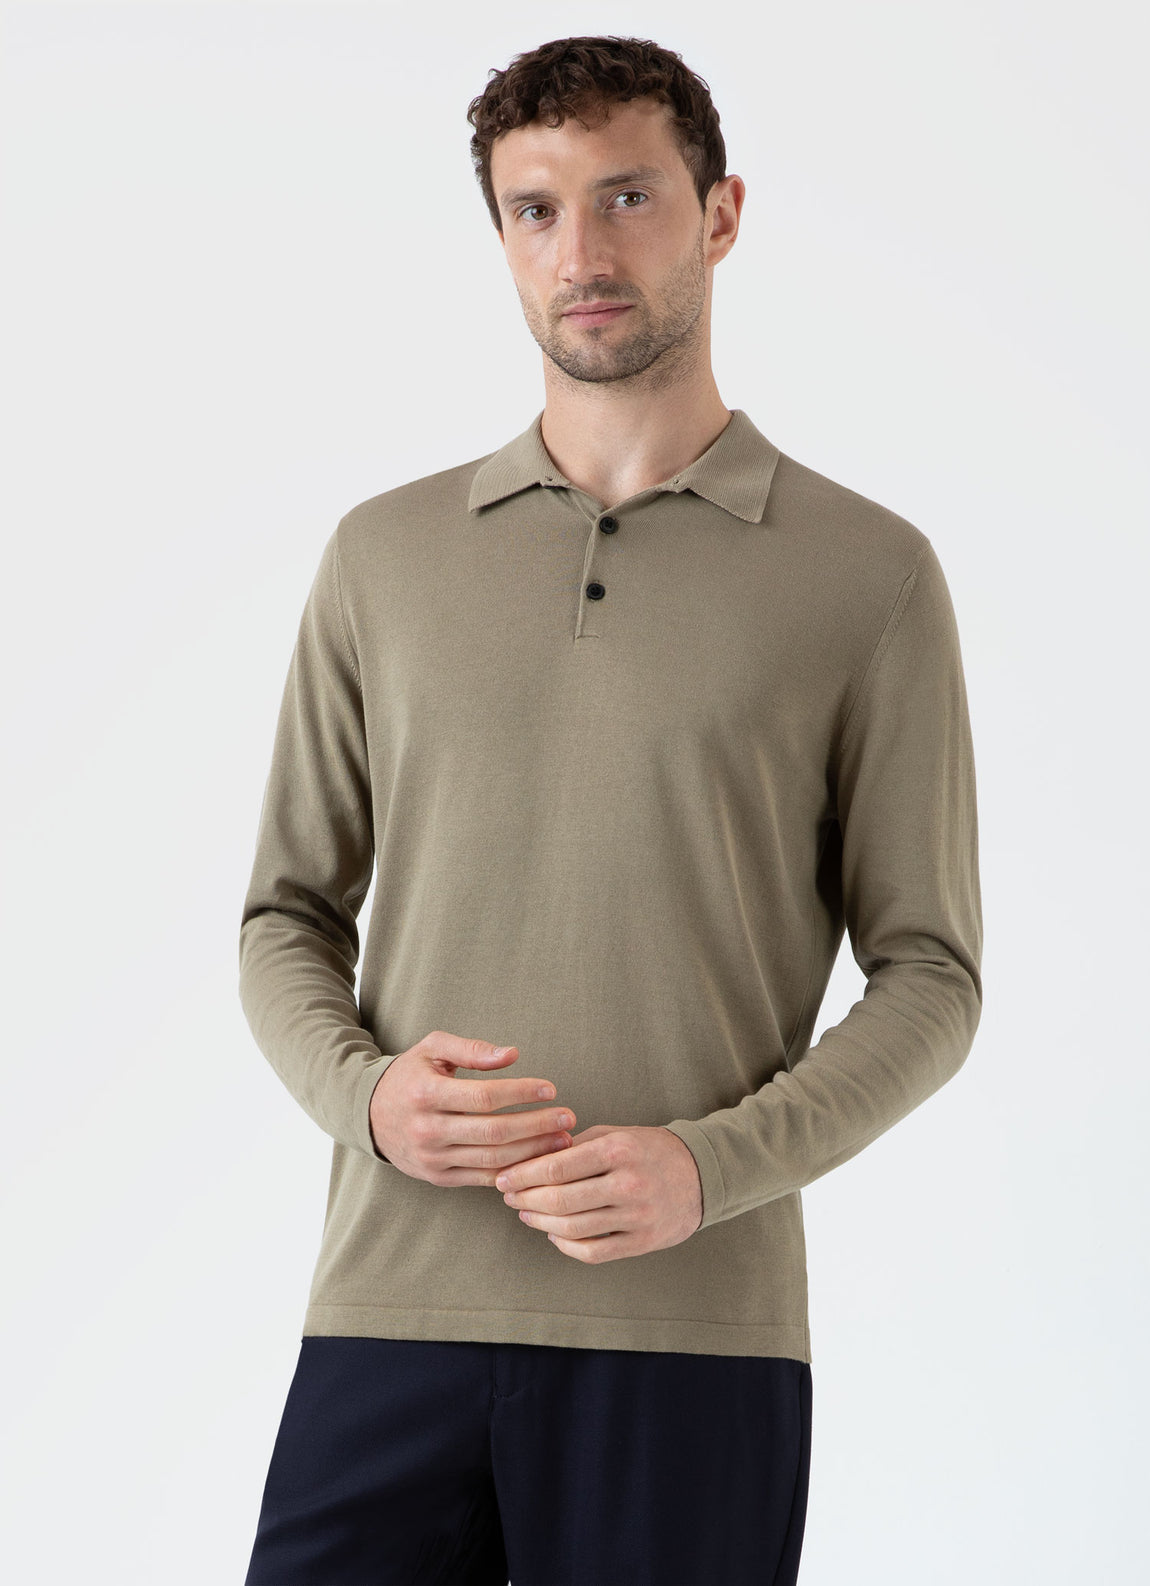 Men's Long Sleeve Sea Island Cotton Polo Shirt in Dark Stone | Sunspel